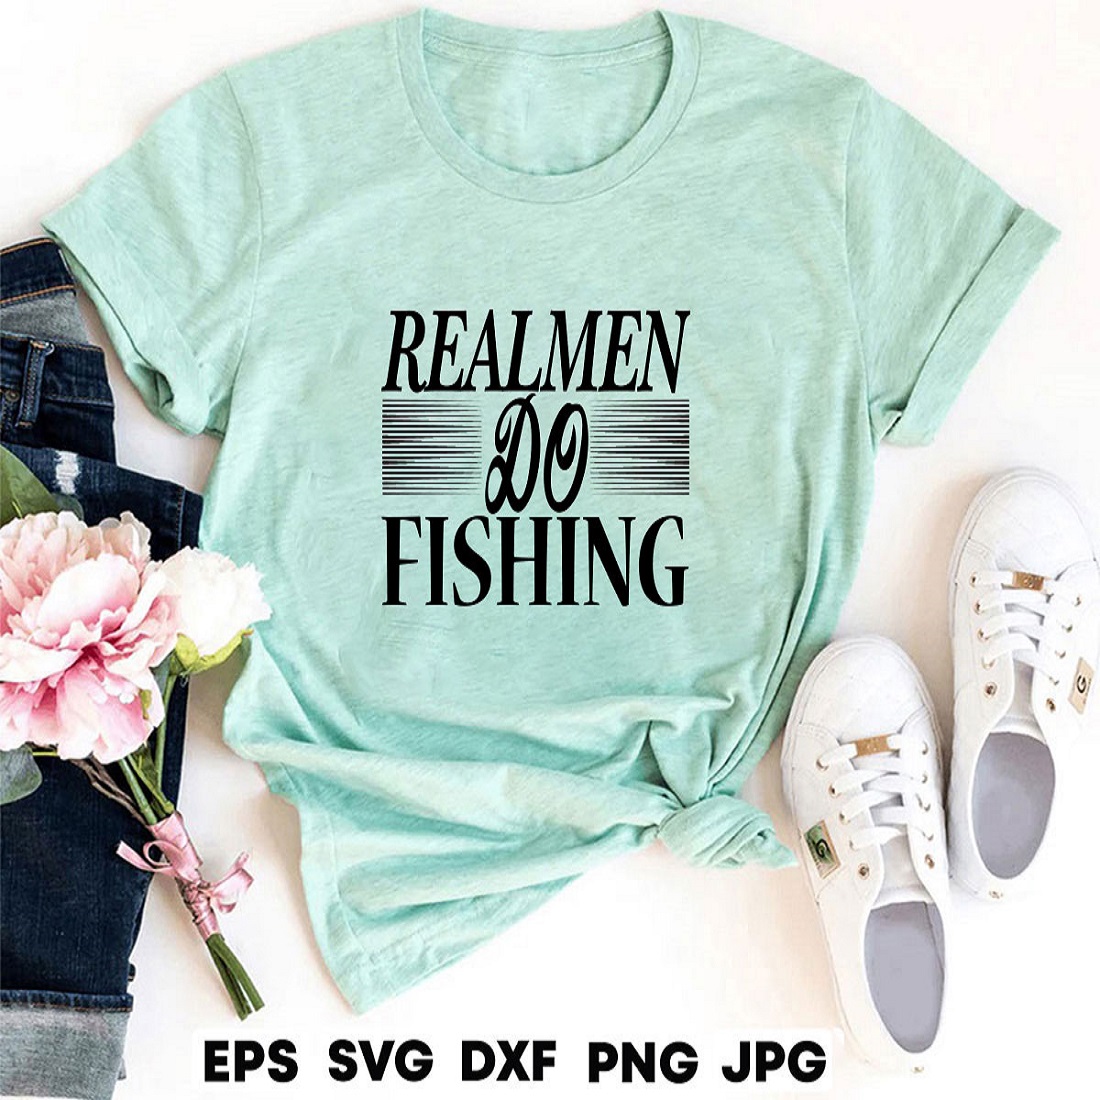 realmen do fishing jj 347